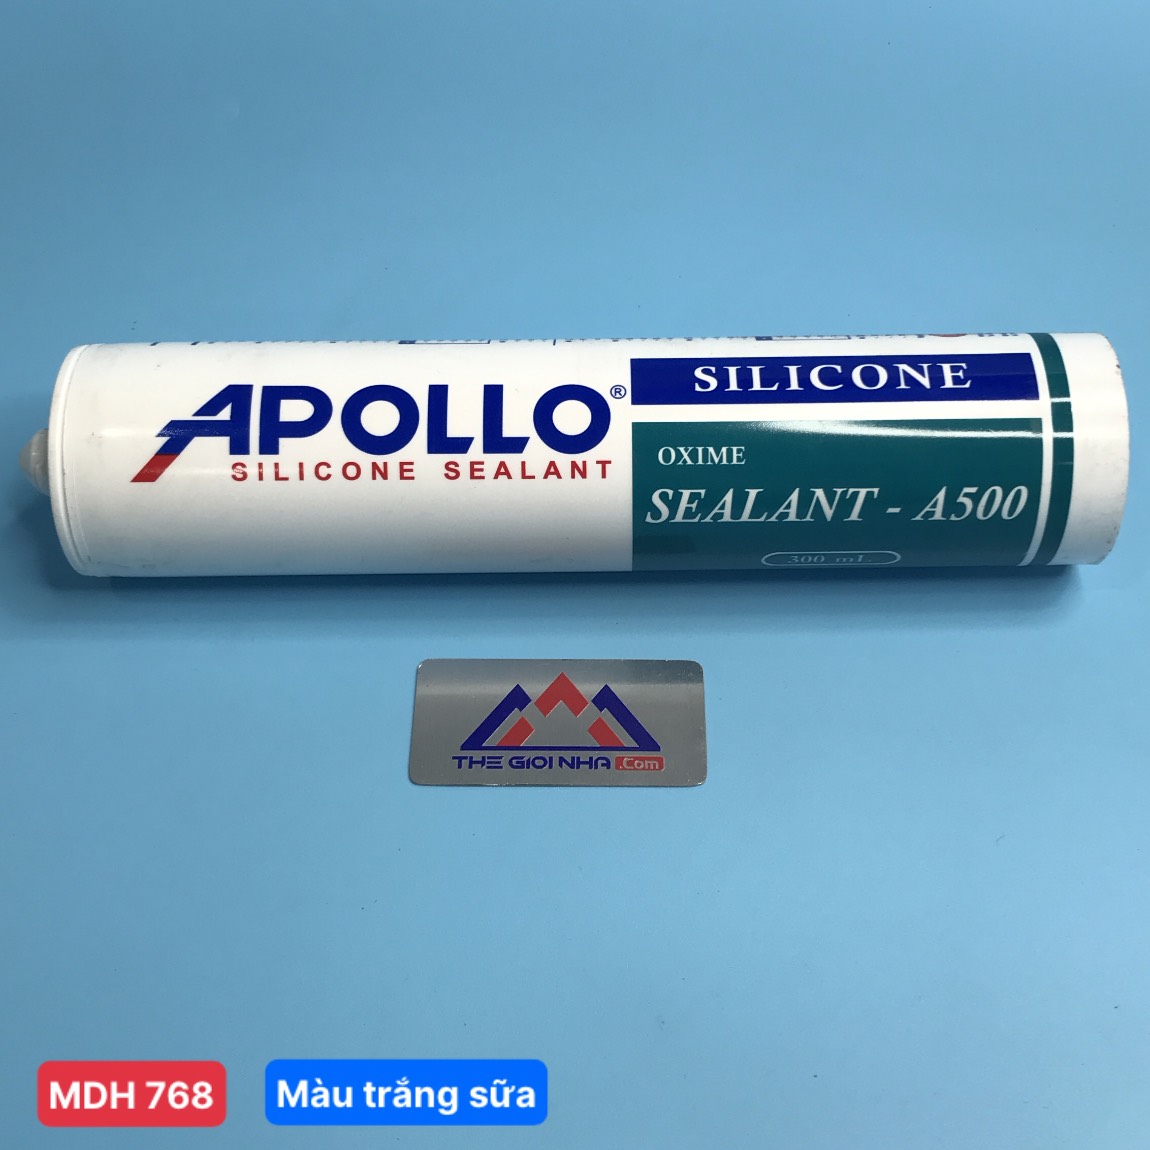 Keo silicone Apollo A500 300ml màu trắng sữa